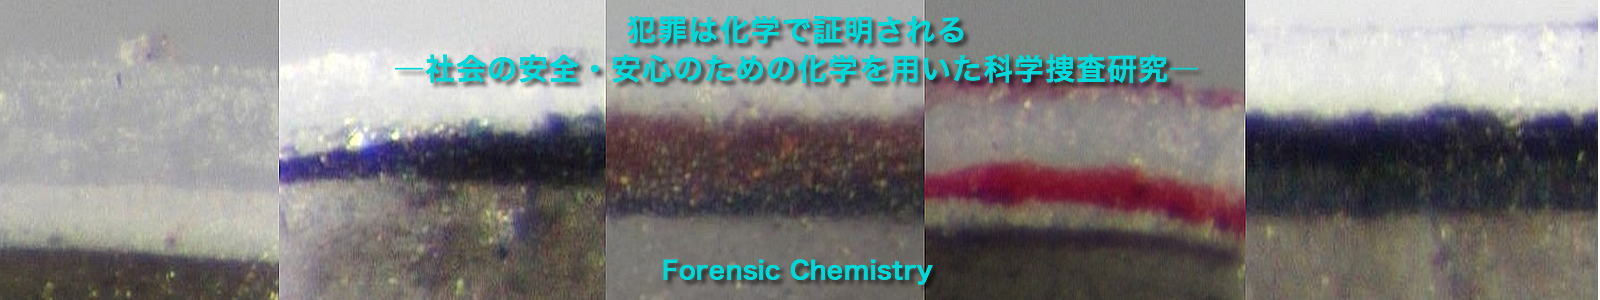 forensic chemistry